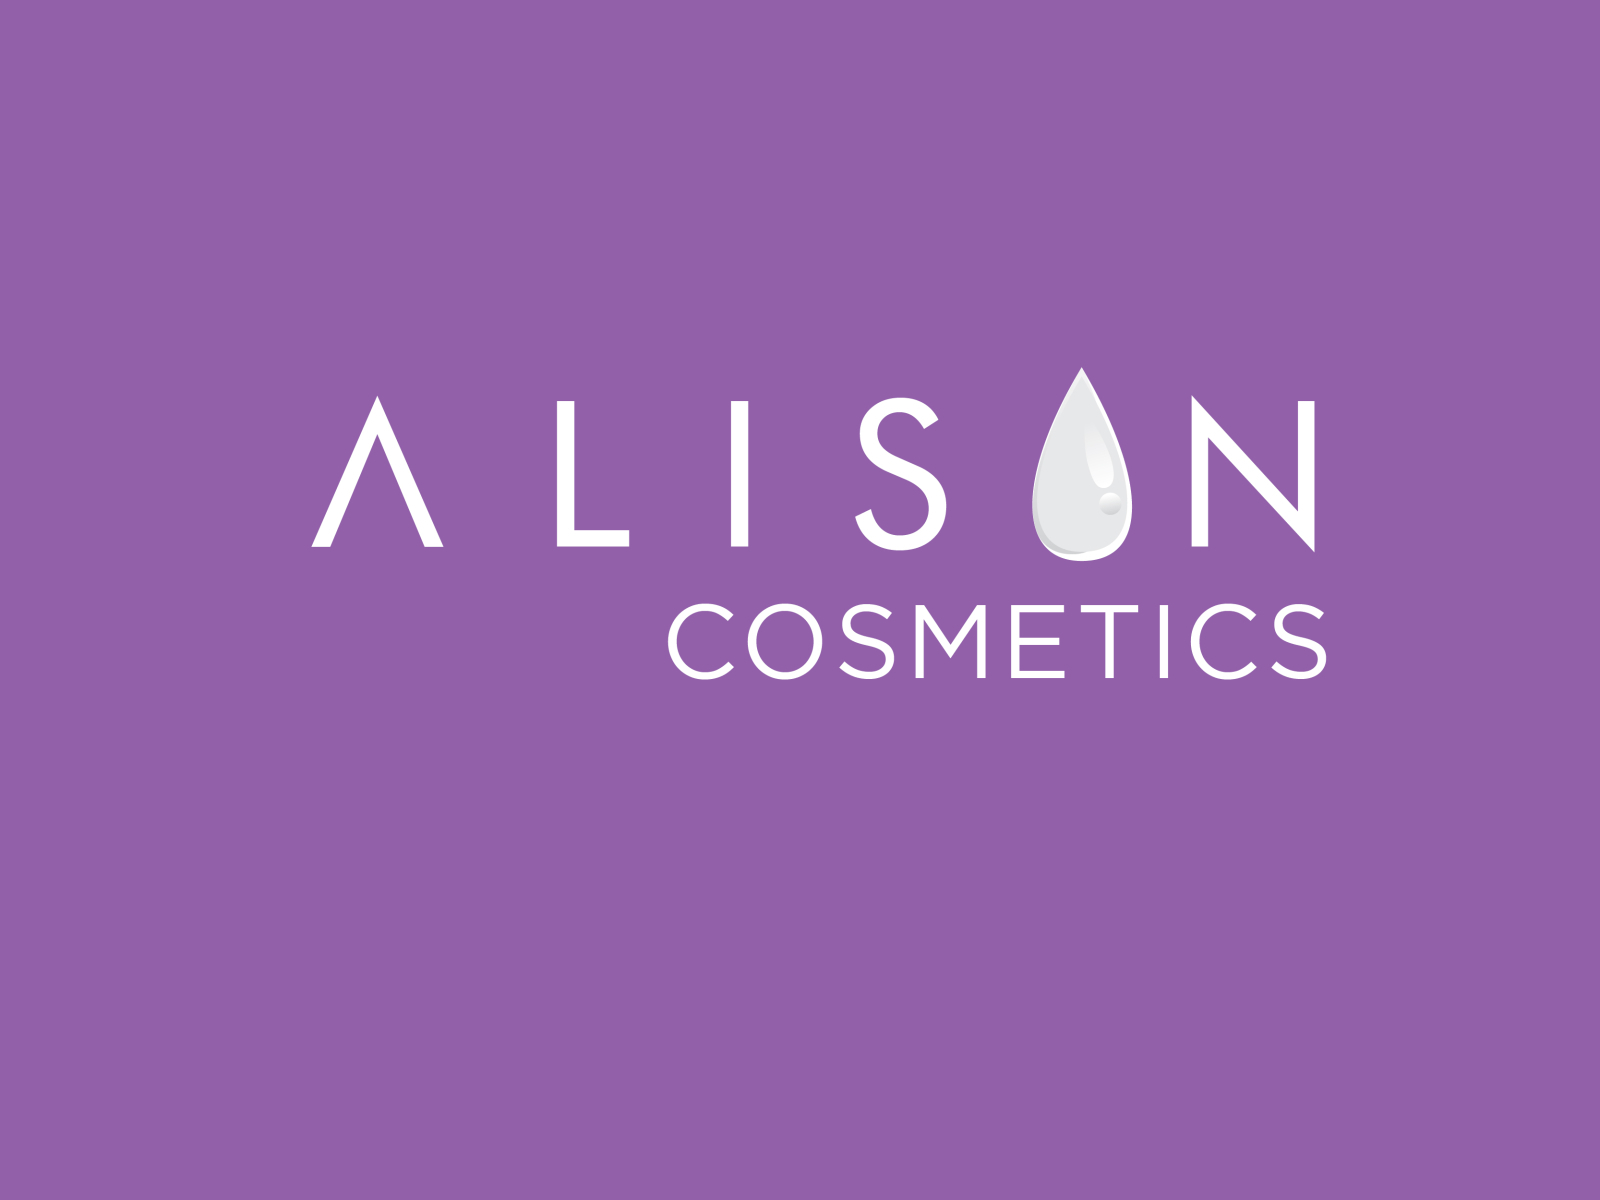 Allison Cosmetic Logo by Collinz Dezignz on Dribbble